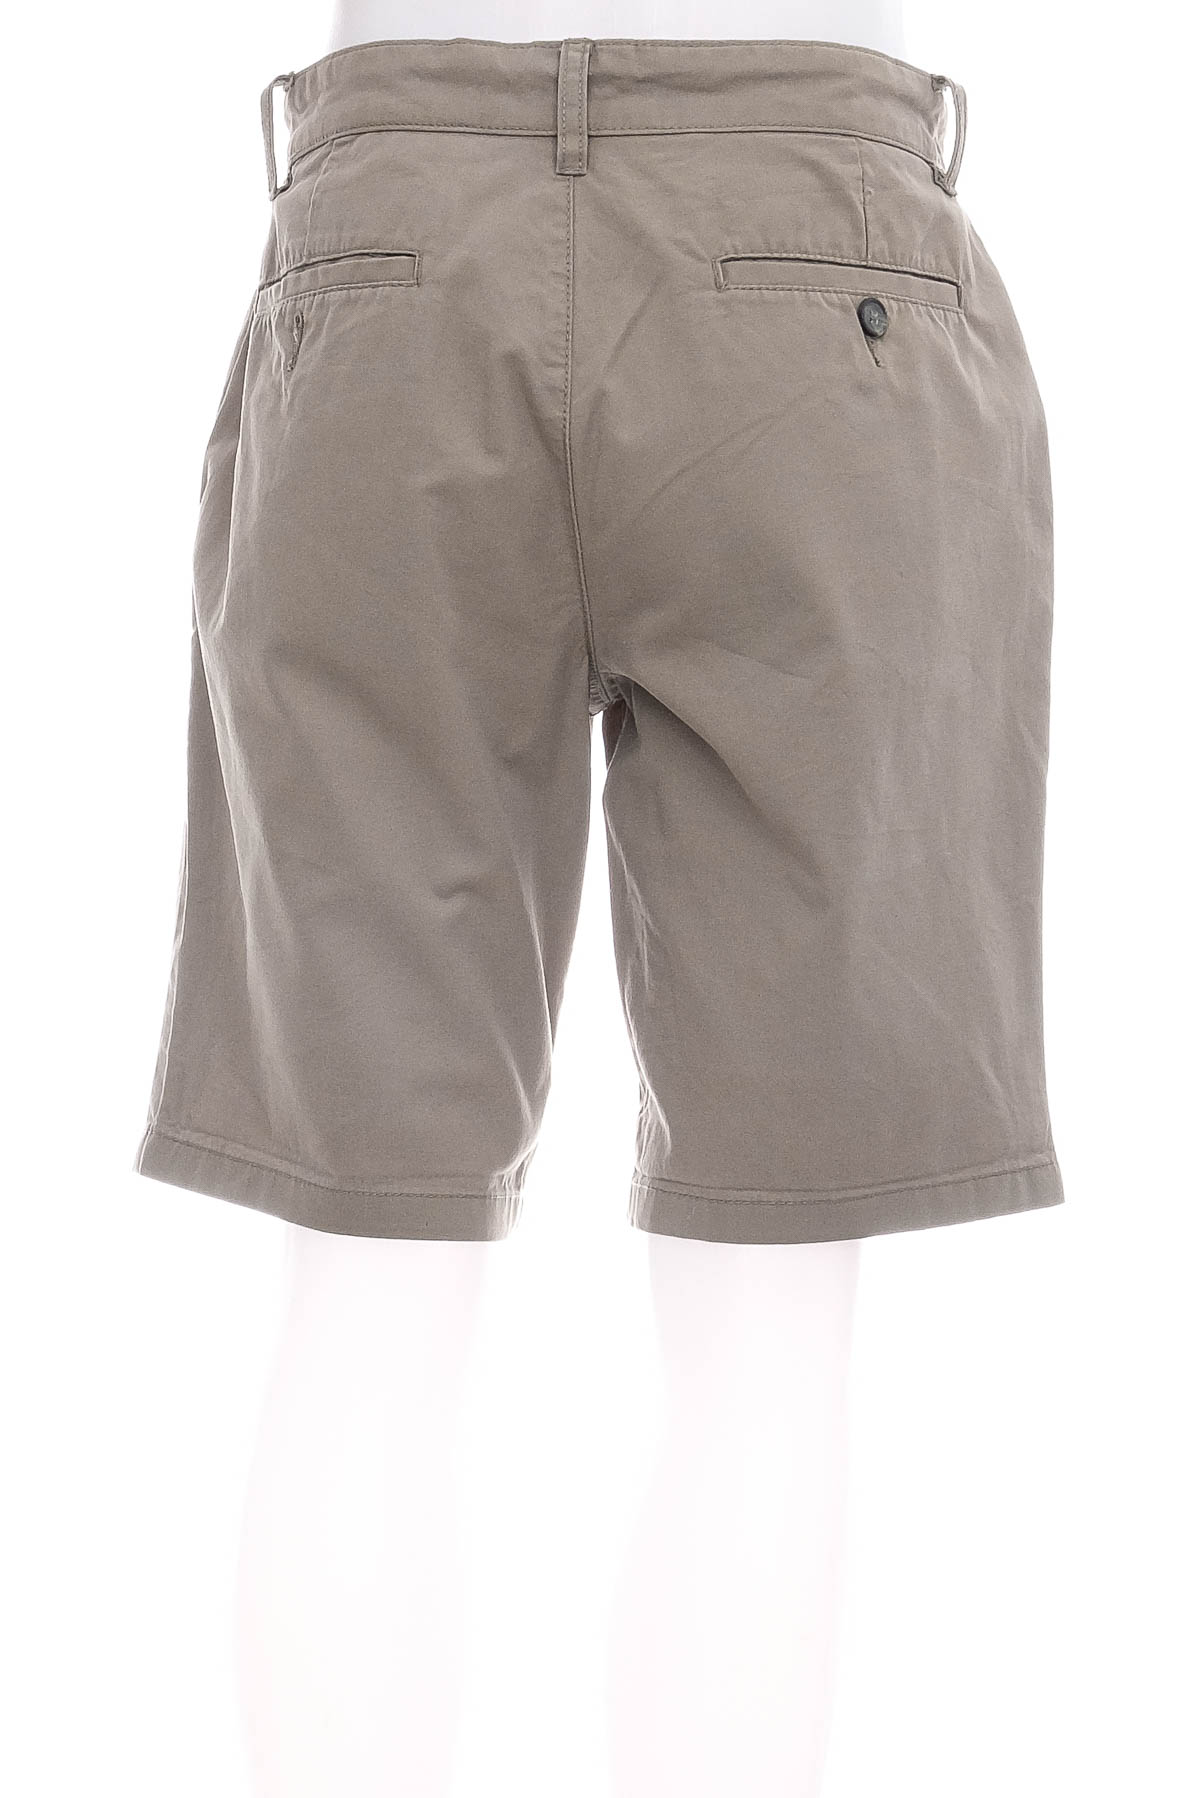 Men's shorts - F&F - 1